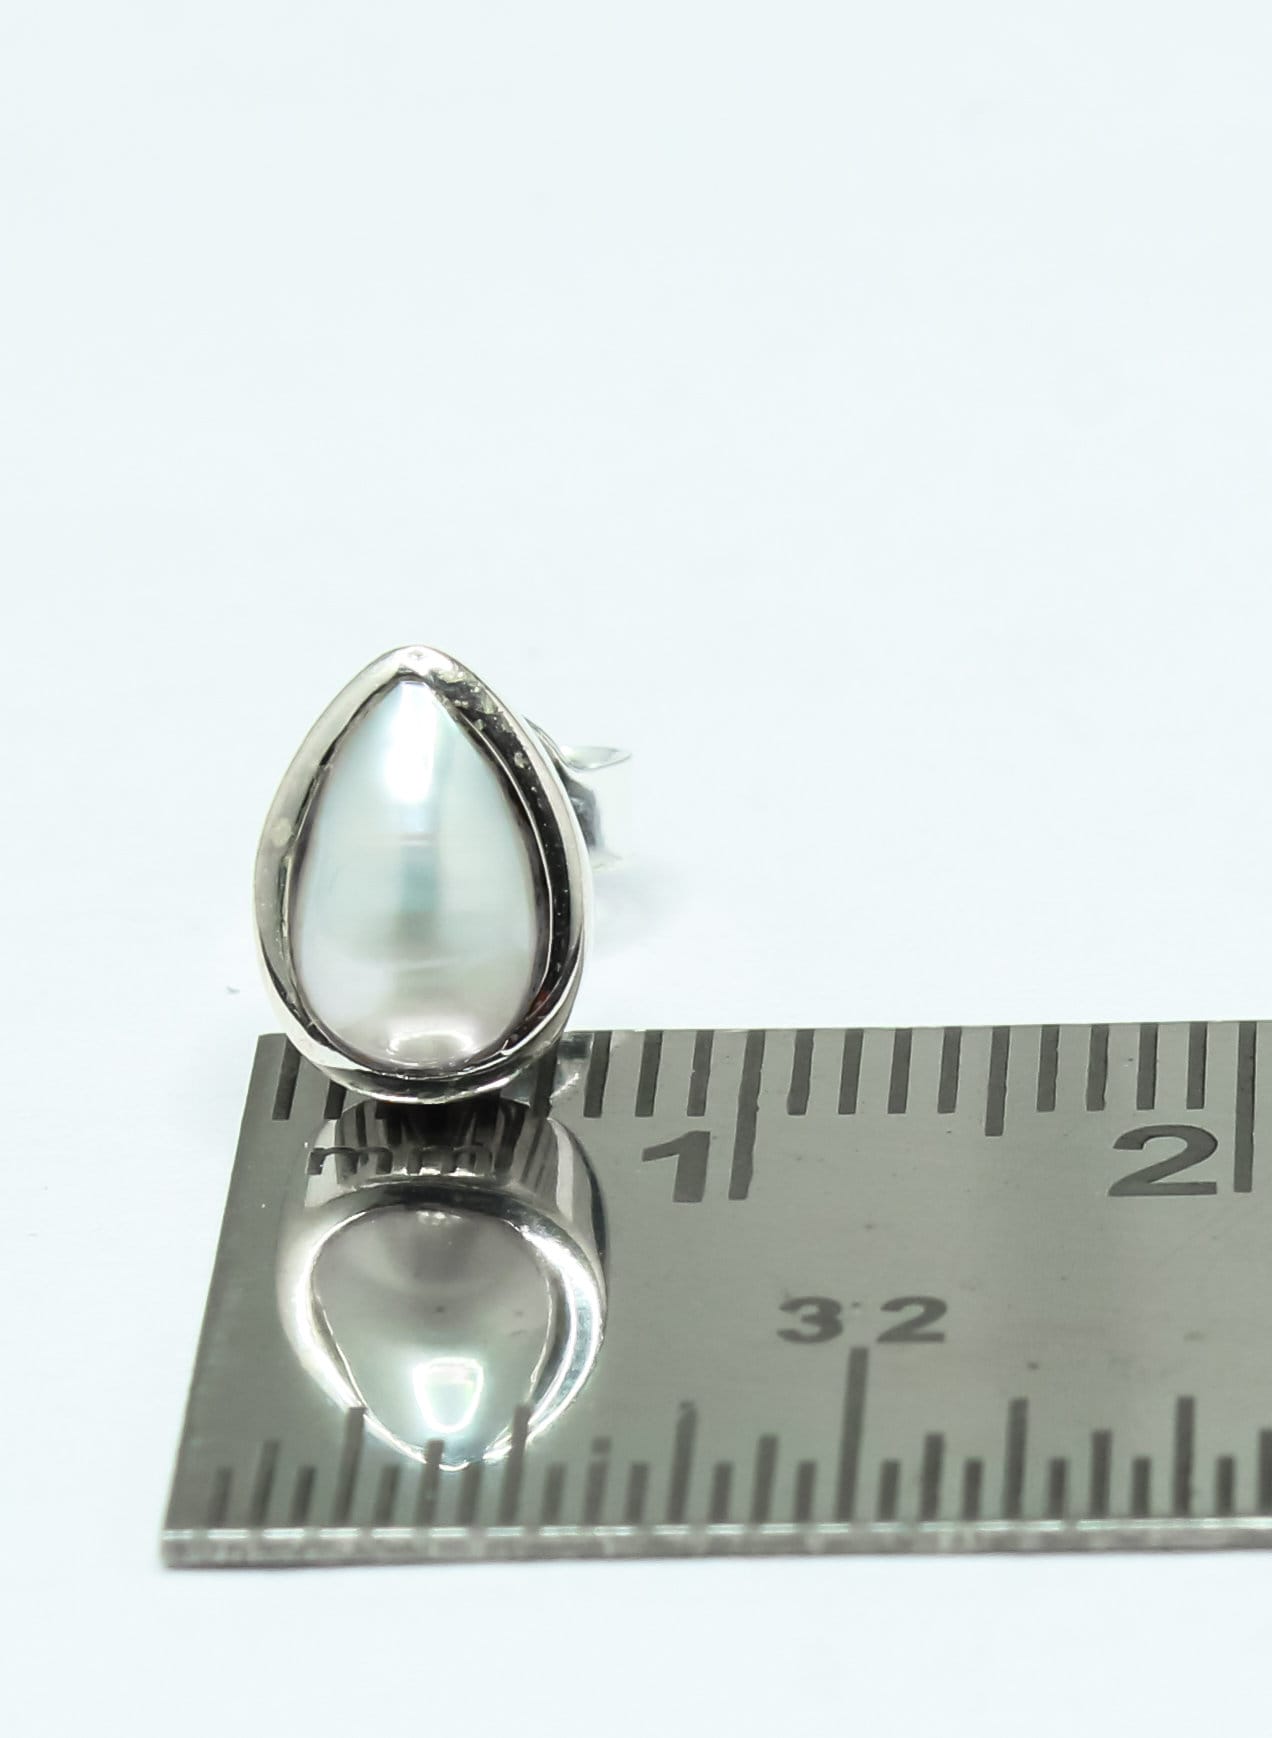 Pear/Teardrop Shaped White PEARL 925 Sterling Silver Simple Stud Earrings